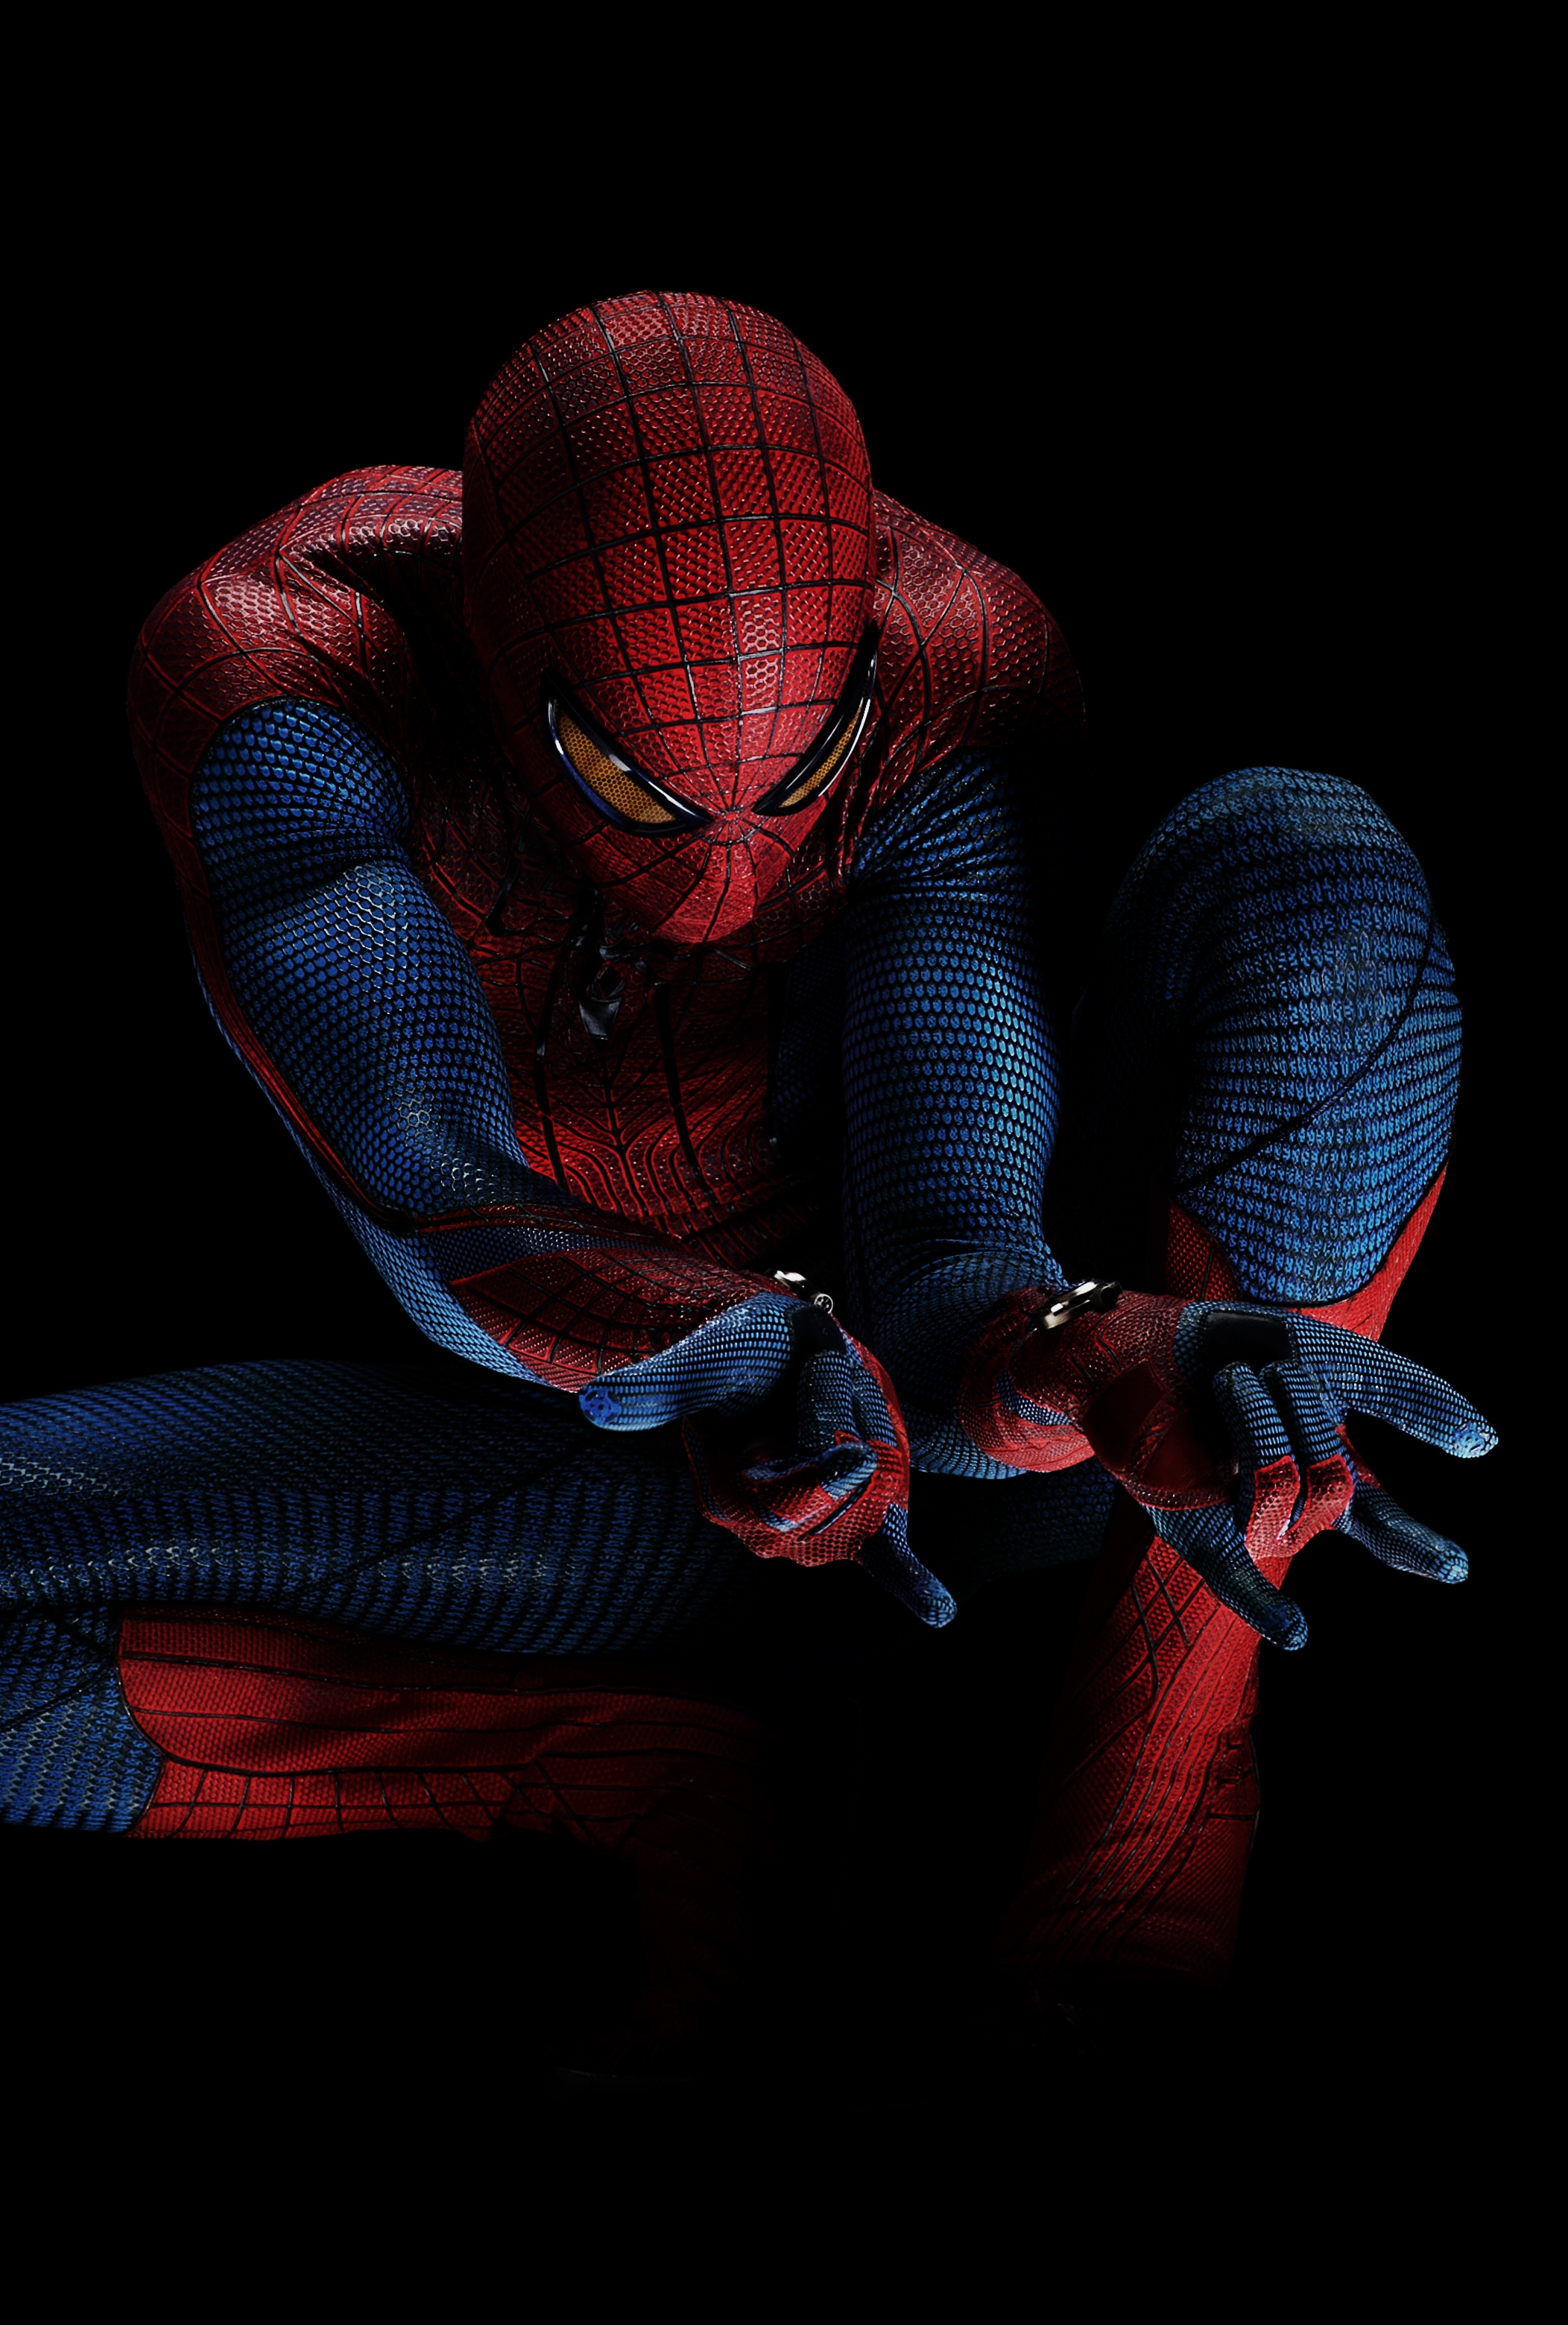 http://blog.films.ie/images/Spiderman2012_091.jpg